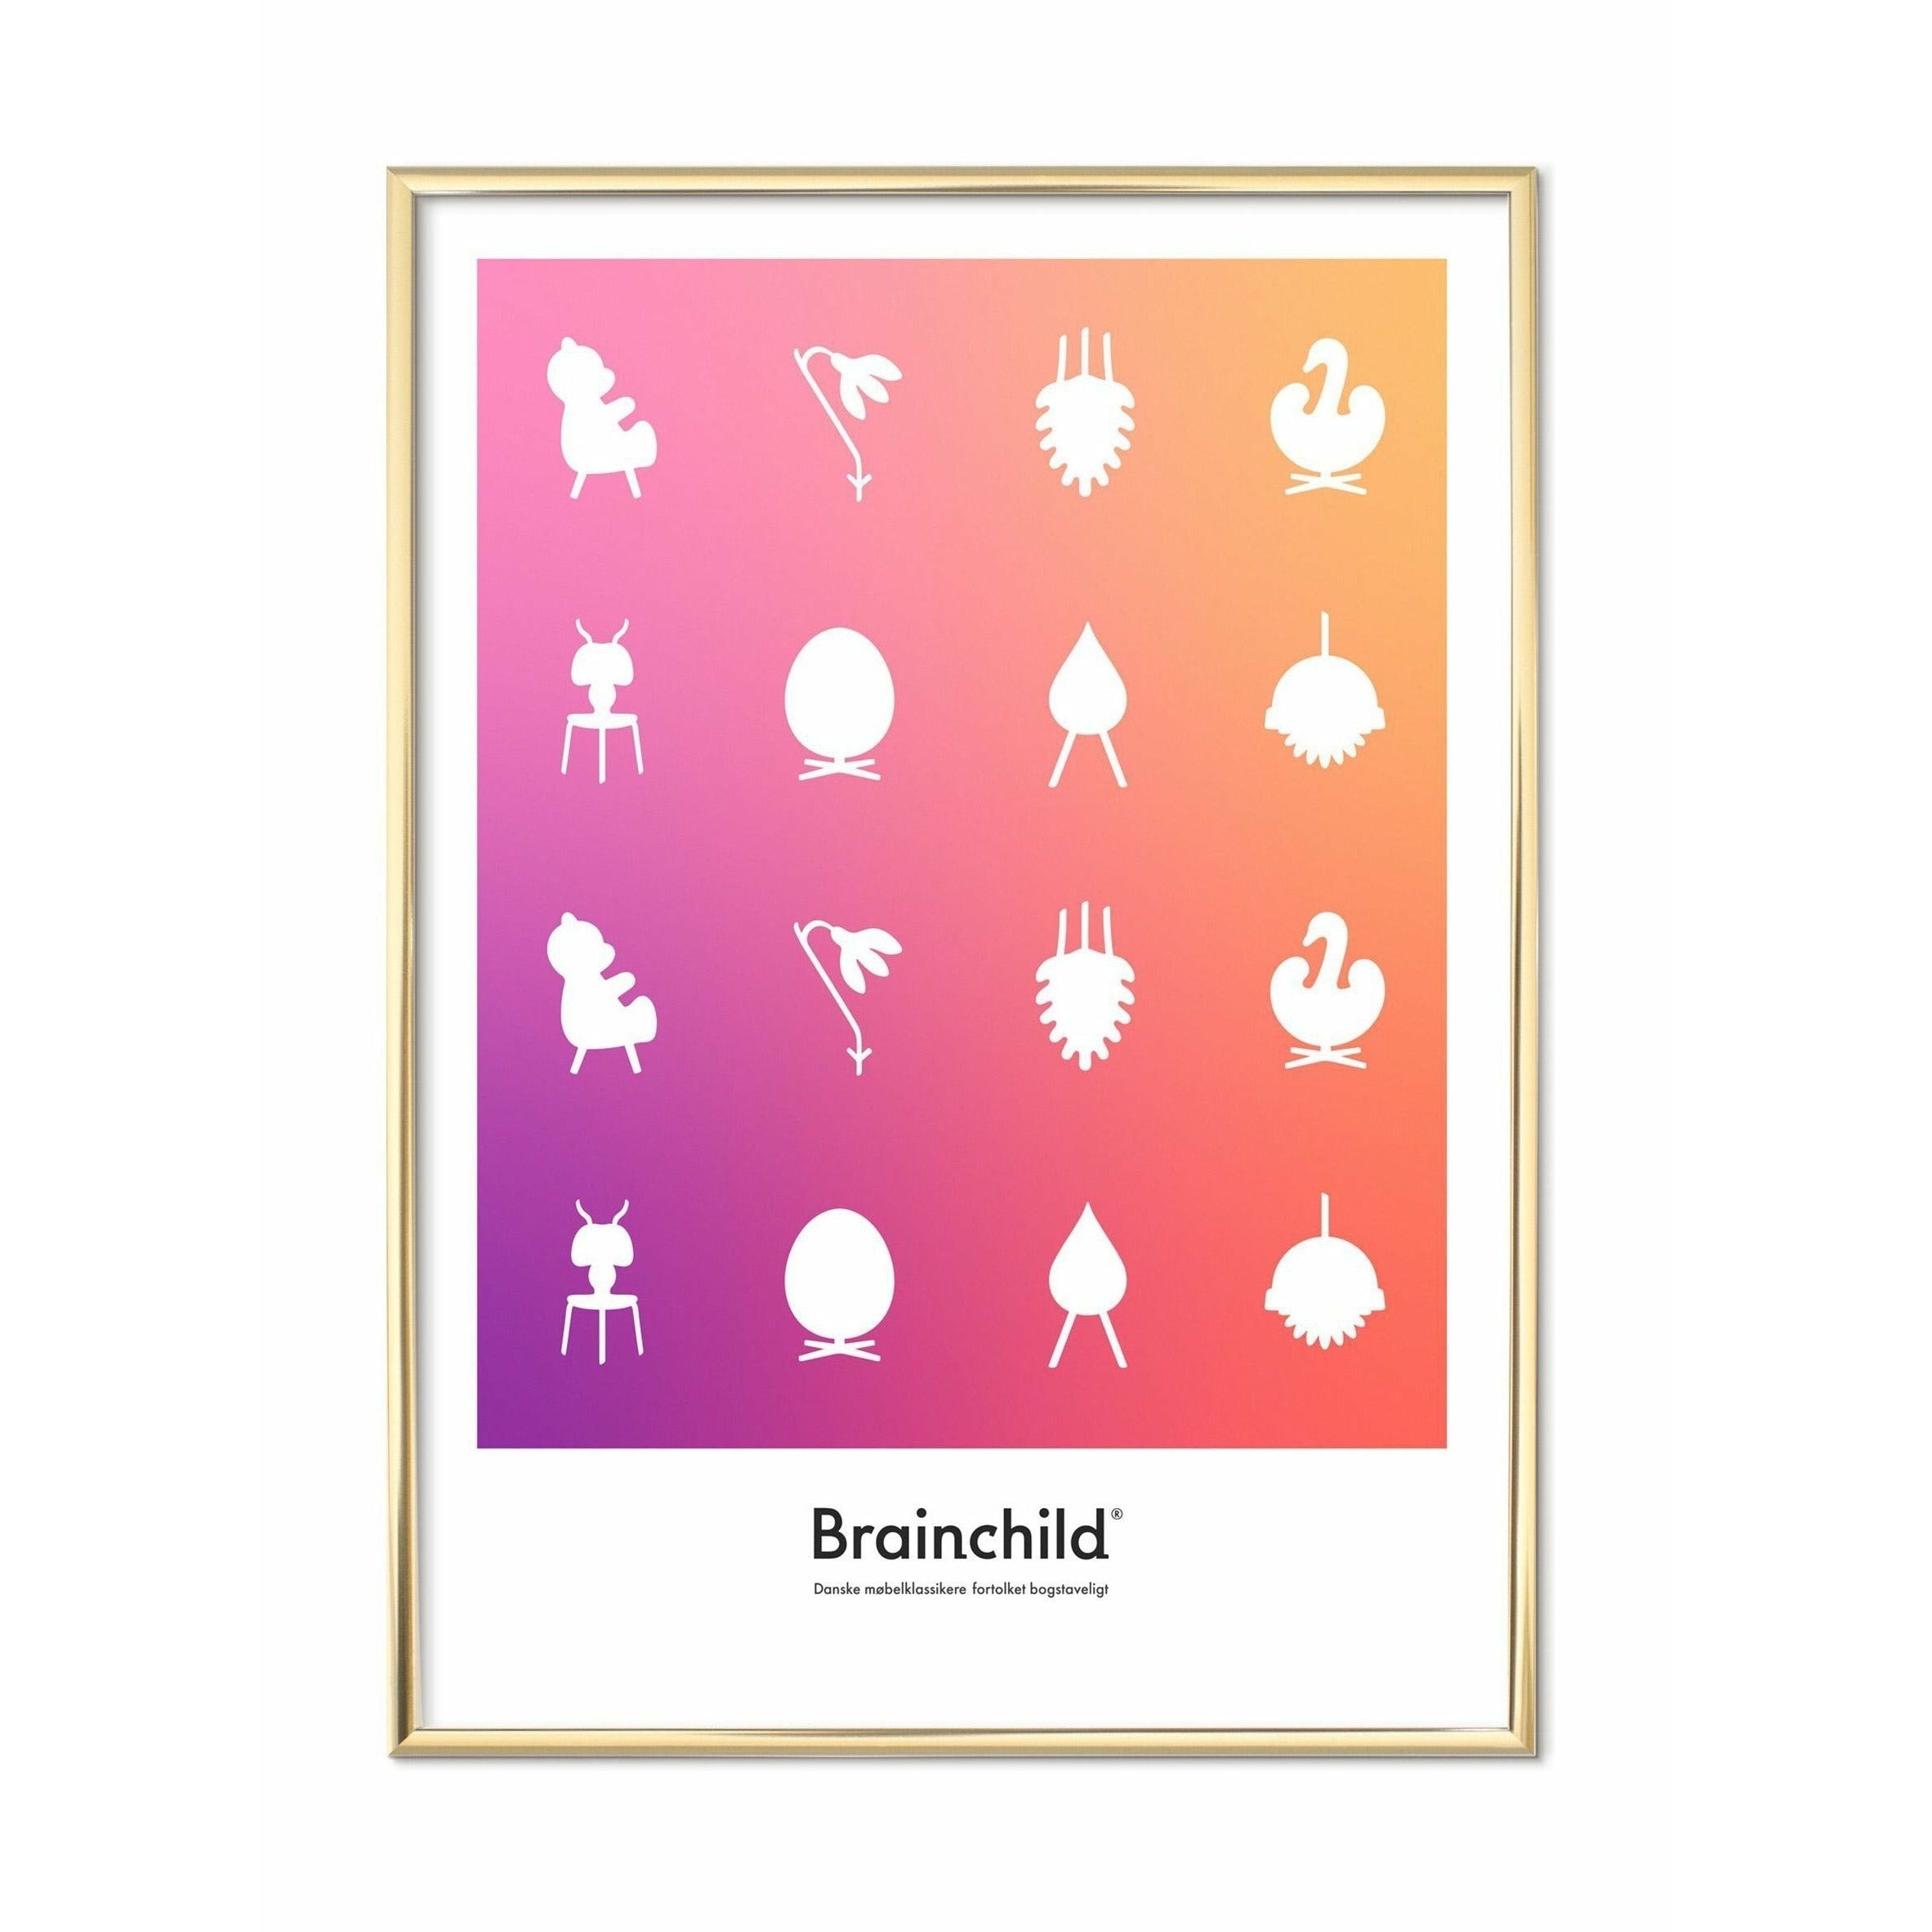 Brainchild Ontwerppictogram Poster, messing gekleurd frame 30 x40 cm, kleur